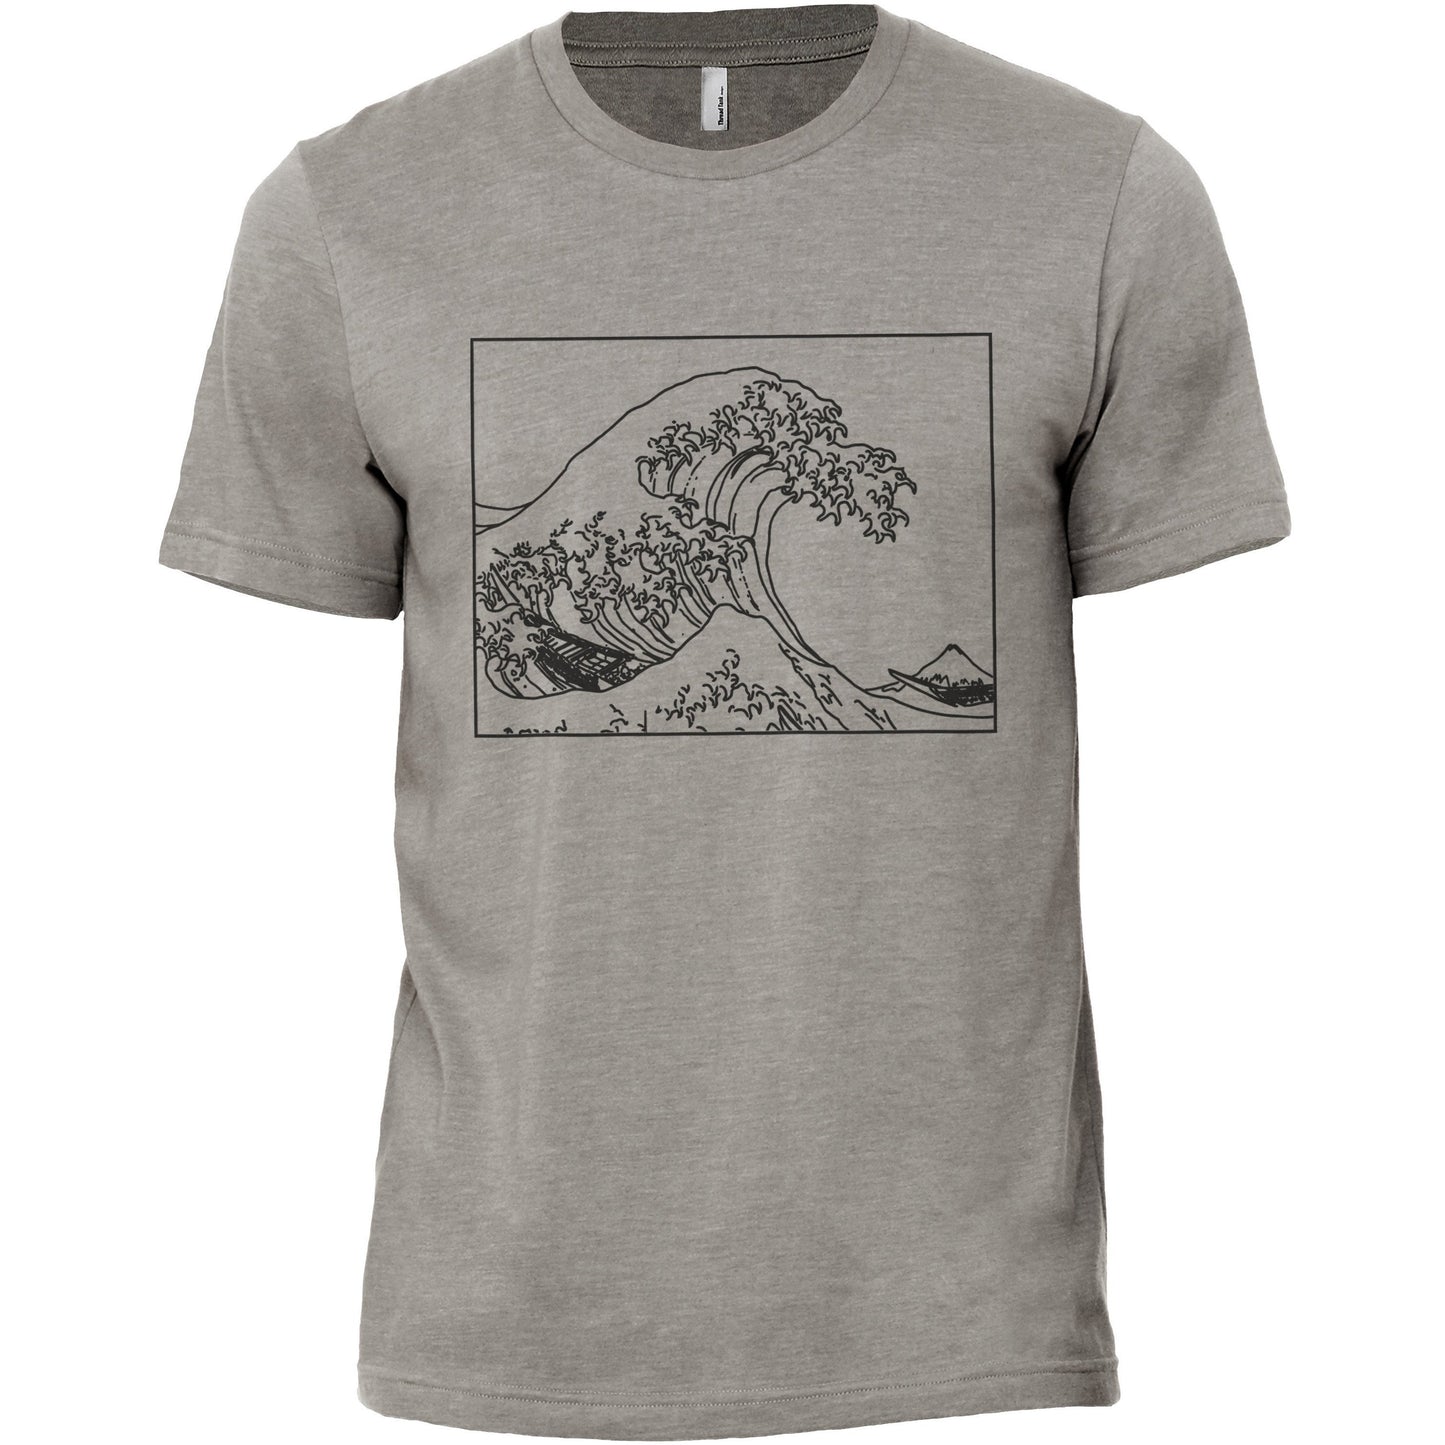 Great Waves Hokusai Military Grey Printed Graphic Men's Crew T-Shirt Tee